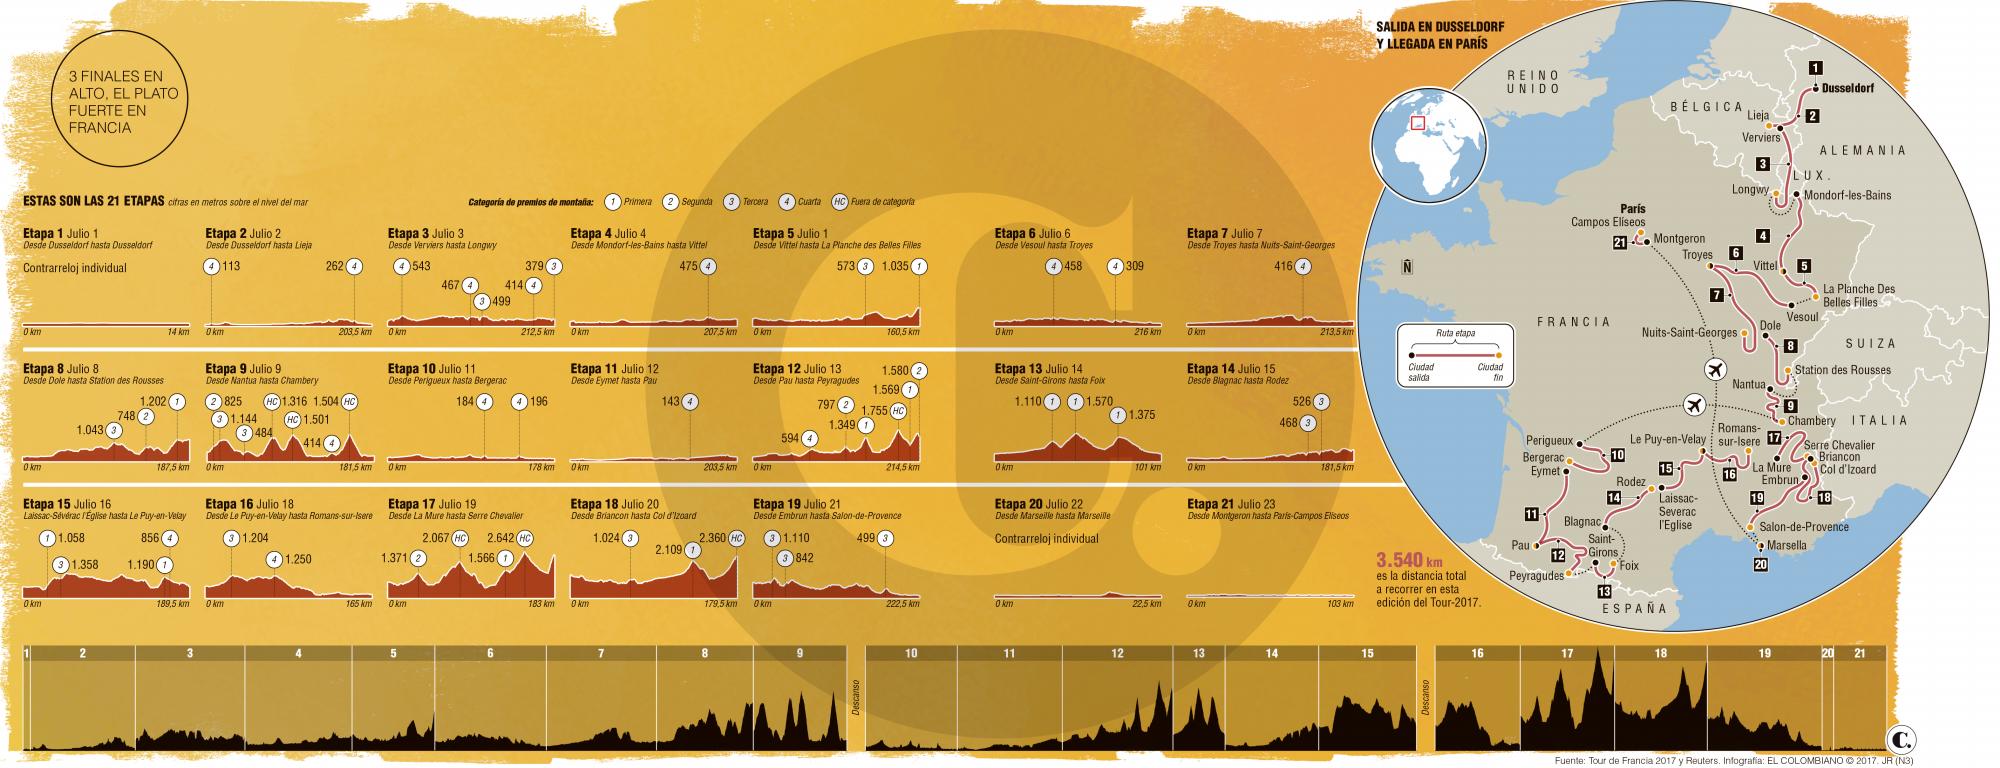 Tour de Francia: etapas y favoritos